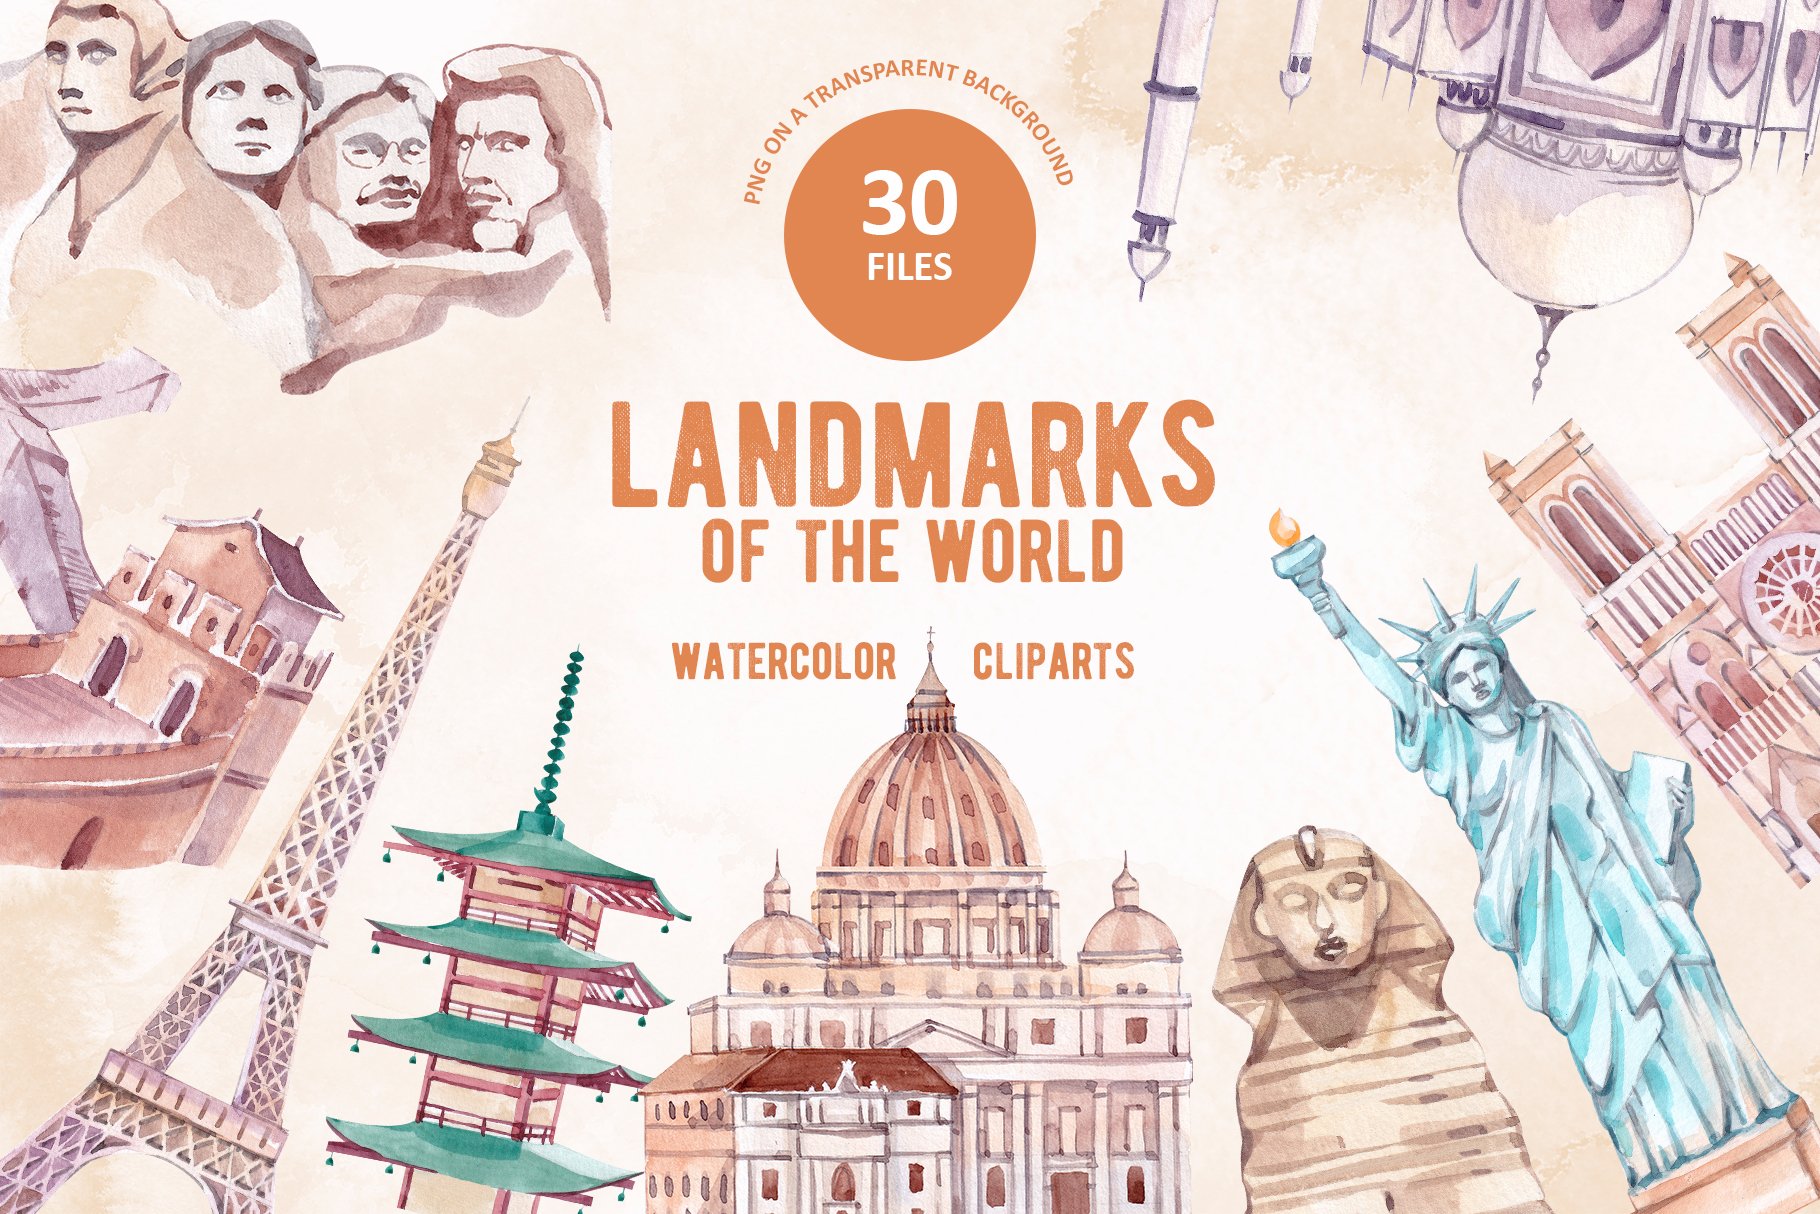 Landmarks of the world cover image.